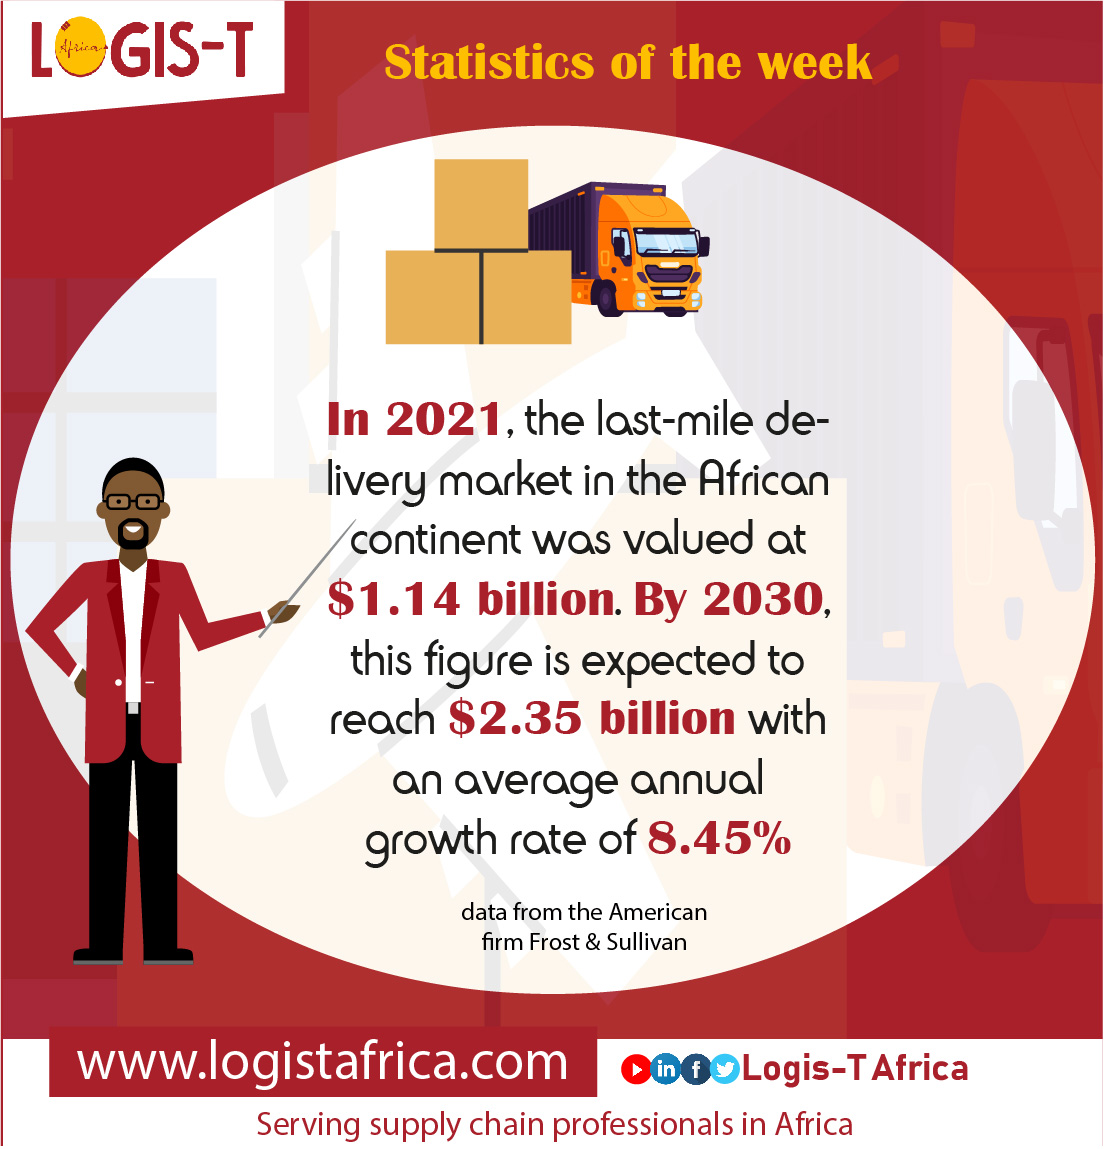 📊 𝐒𝐭𝐚𝐭𝐢𝐬𝐭𝐢𝐜𝐬 𝐨𝐟 𝐭𝐡𝐞 𝐰𝐞𝐞𝐤 The last-mile delibery market in Africa #deliverymarket #logistics #supplychain #africa #lastmile #logistafrica